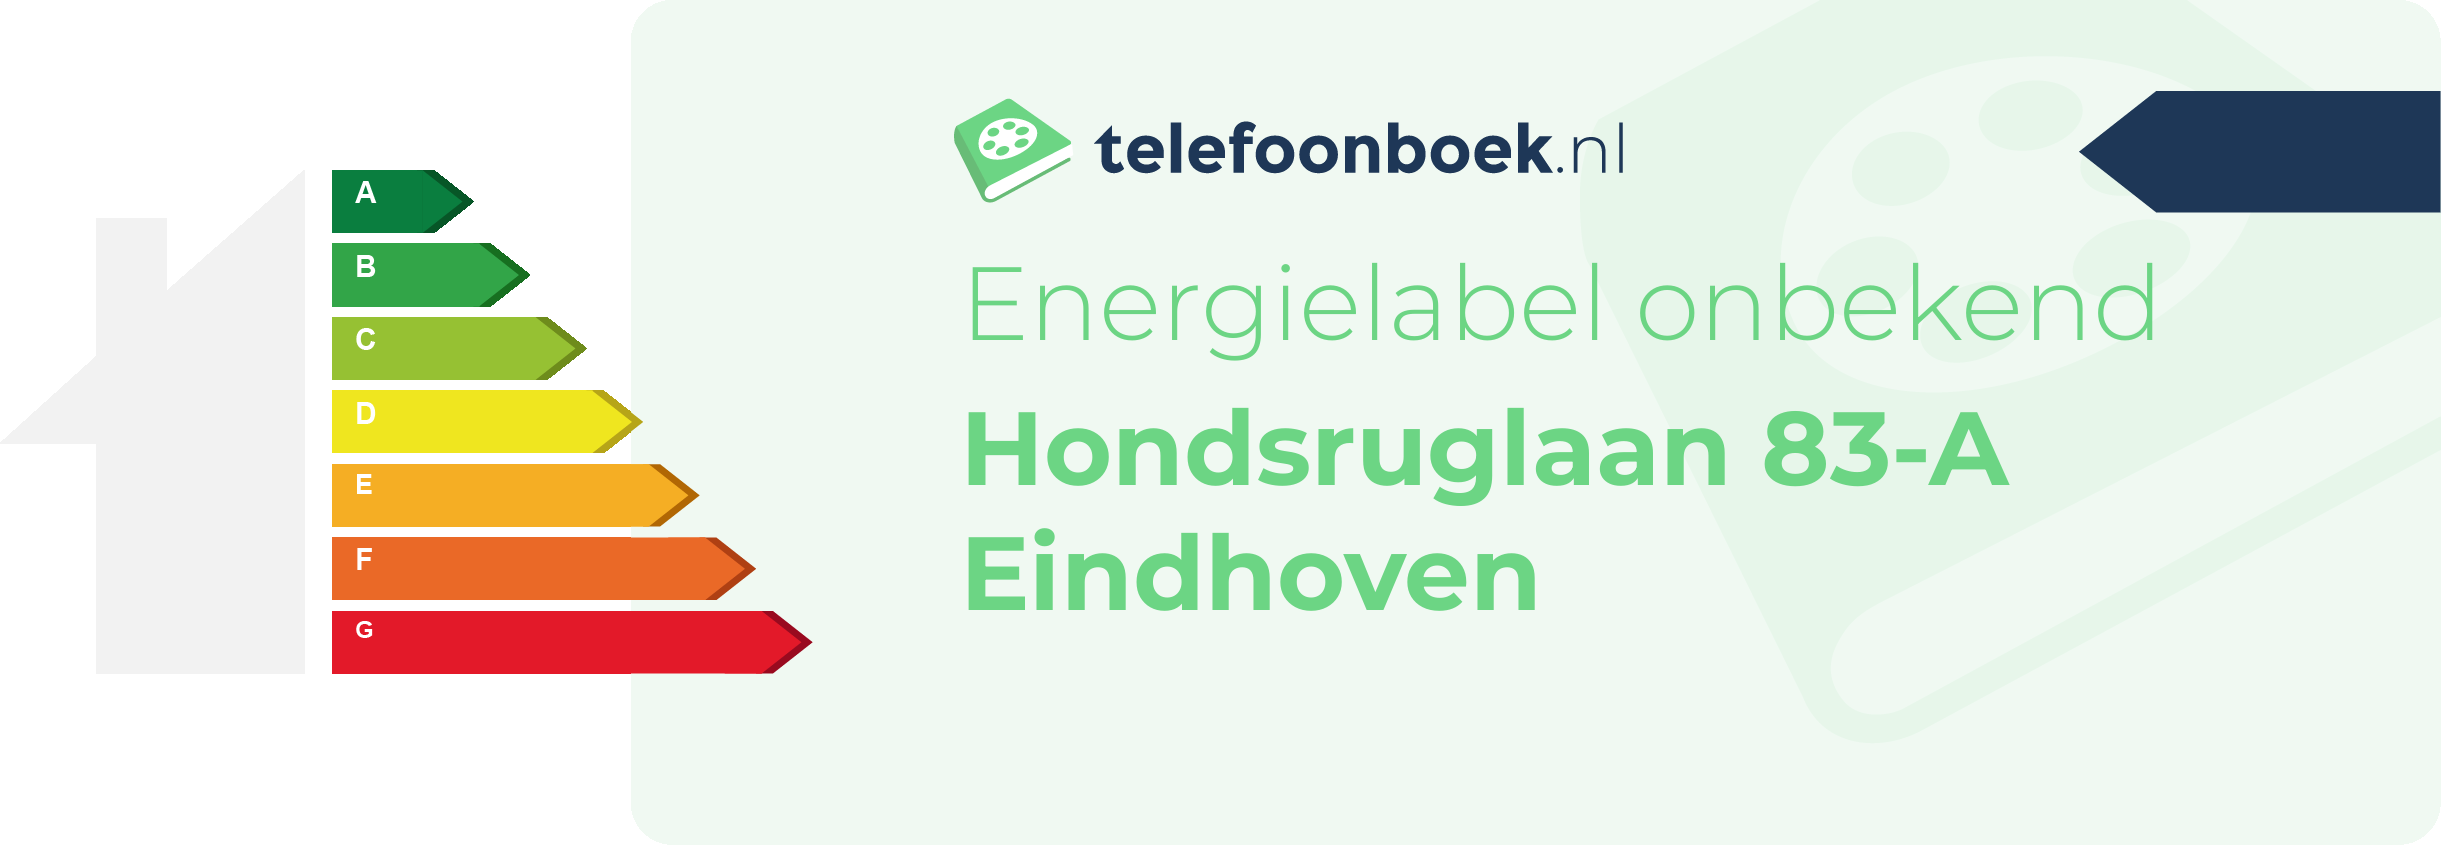 Energielabel Hondsruglaan 83-A Eindhoven